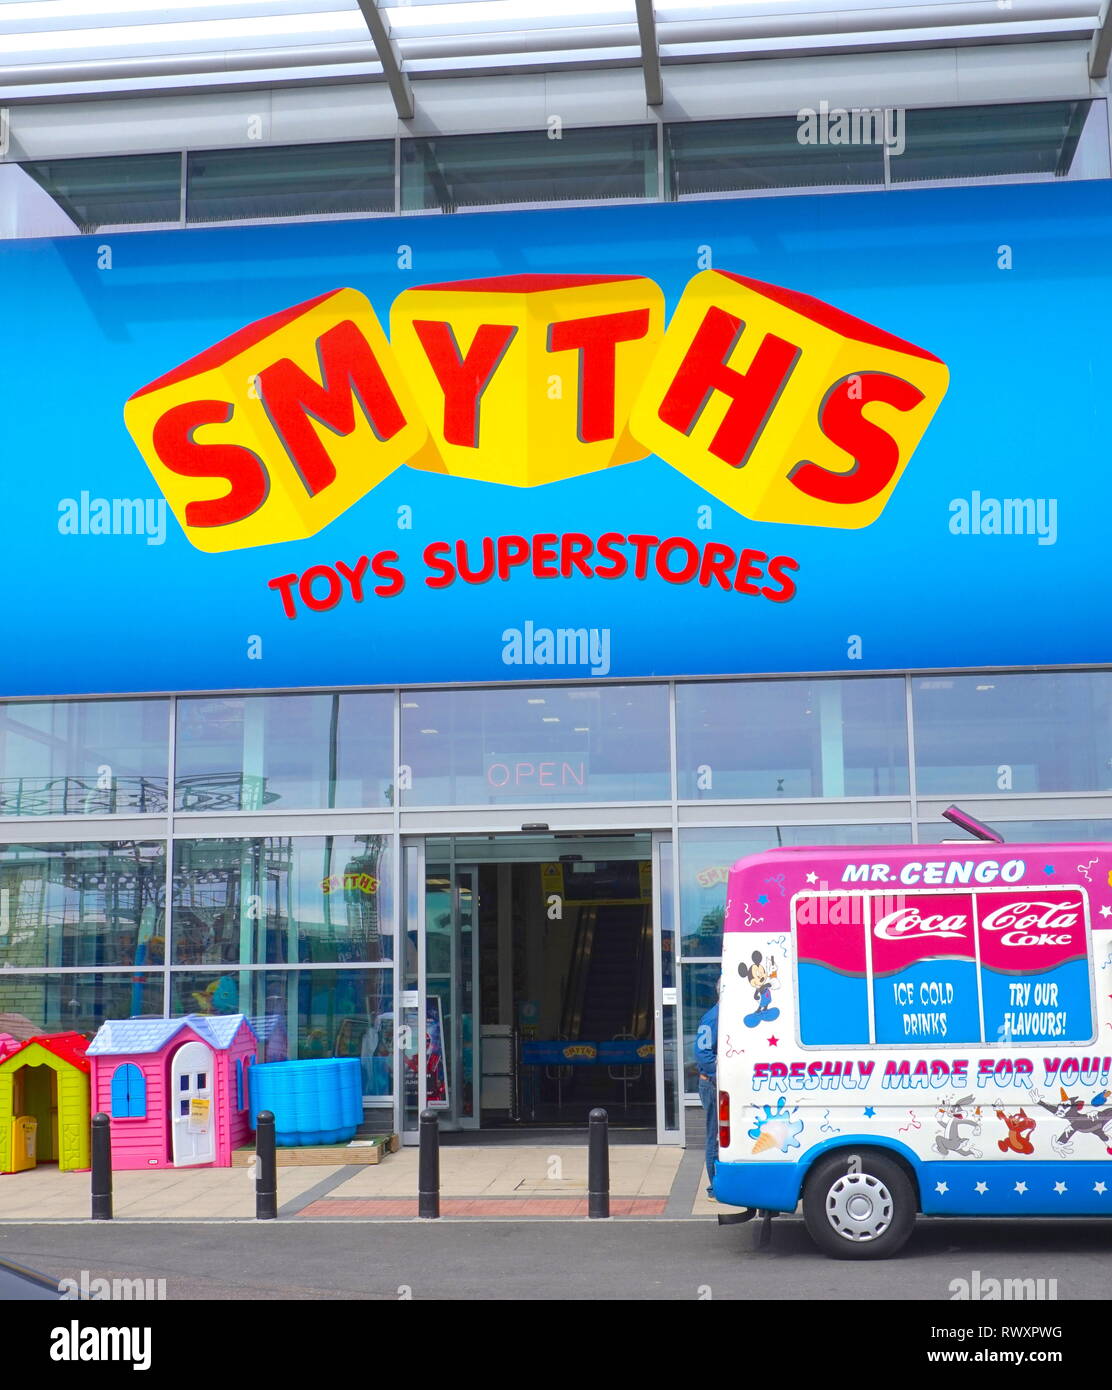 Smyths Toy Superstore, Brent Cross, London Stock Photo - Alamy